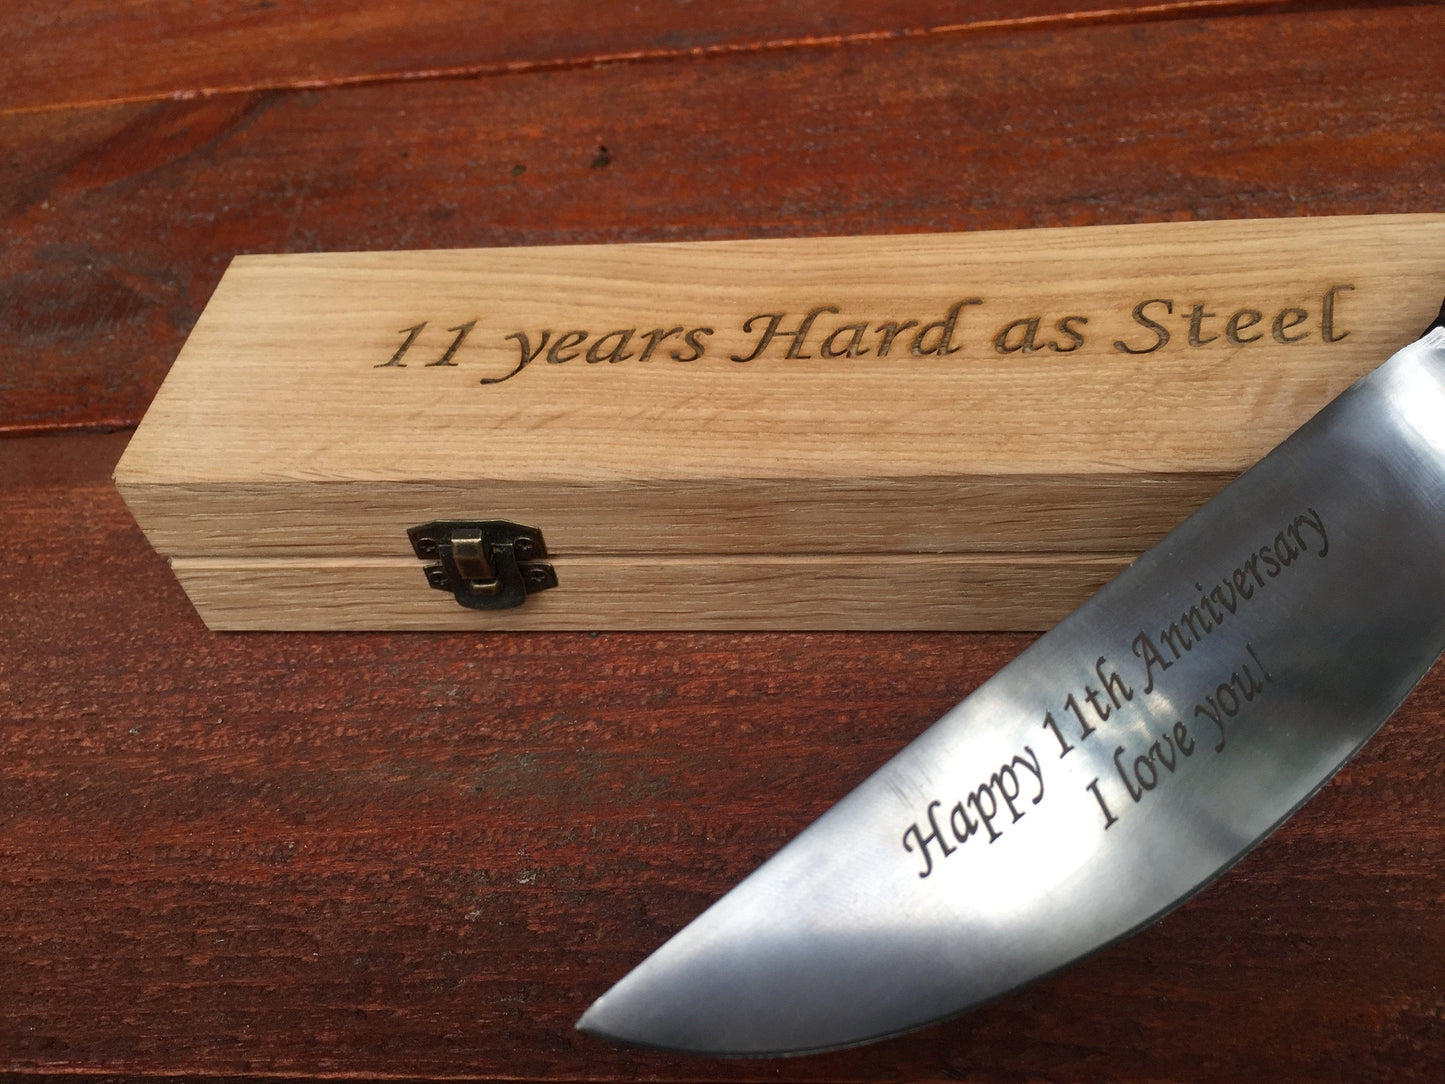 11th anniversary,11 year anniversary,steel anniversary,steel wedding,railroad spike knife,wedding anniversary,steel gift for him,steel gifts